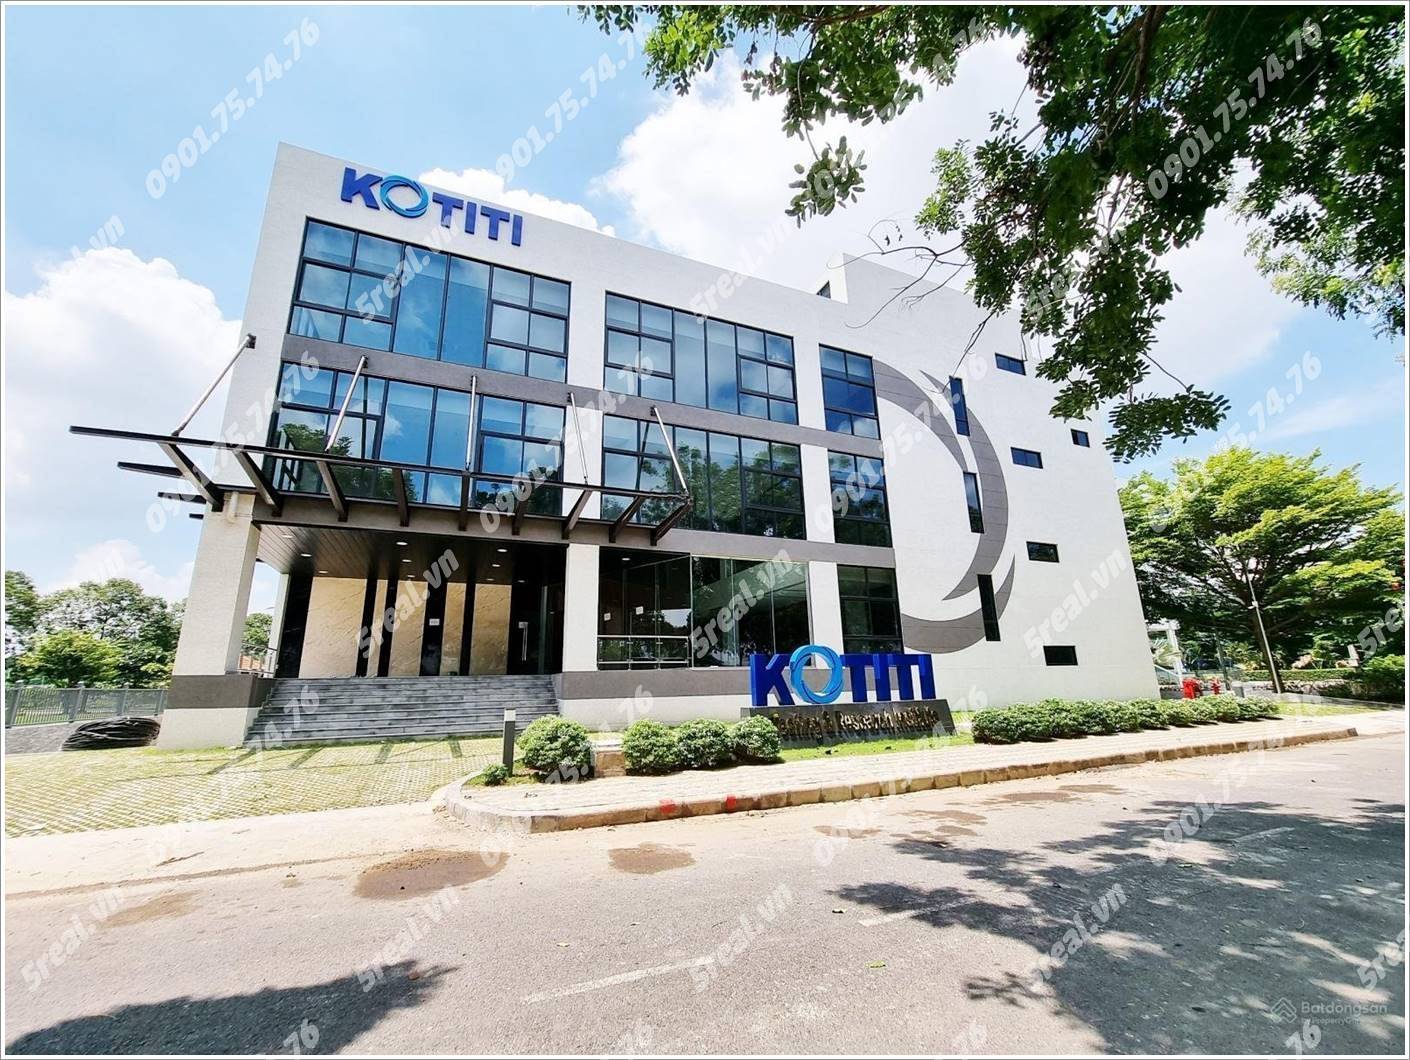 kotiti-building-duong-19c-cho-thue-van-phong-quan-7-5real.vn-01